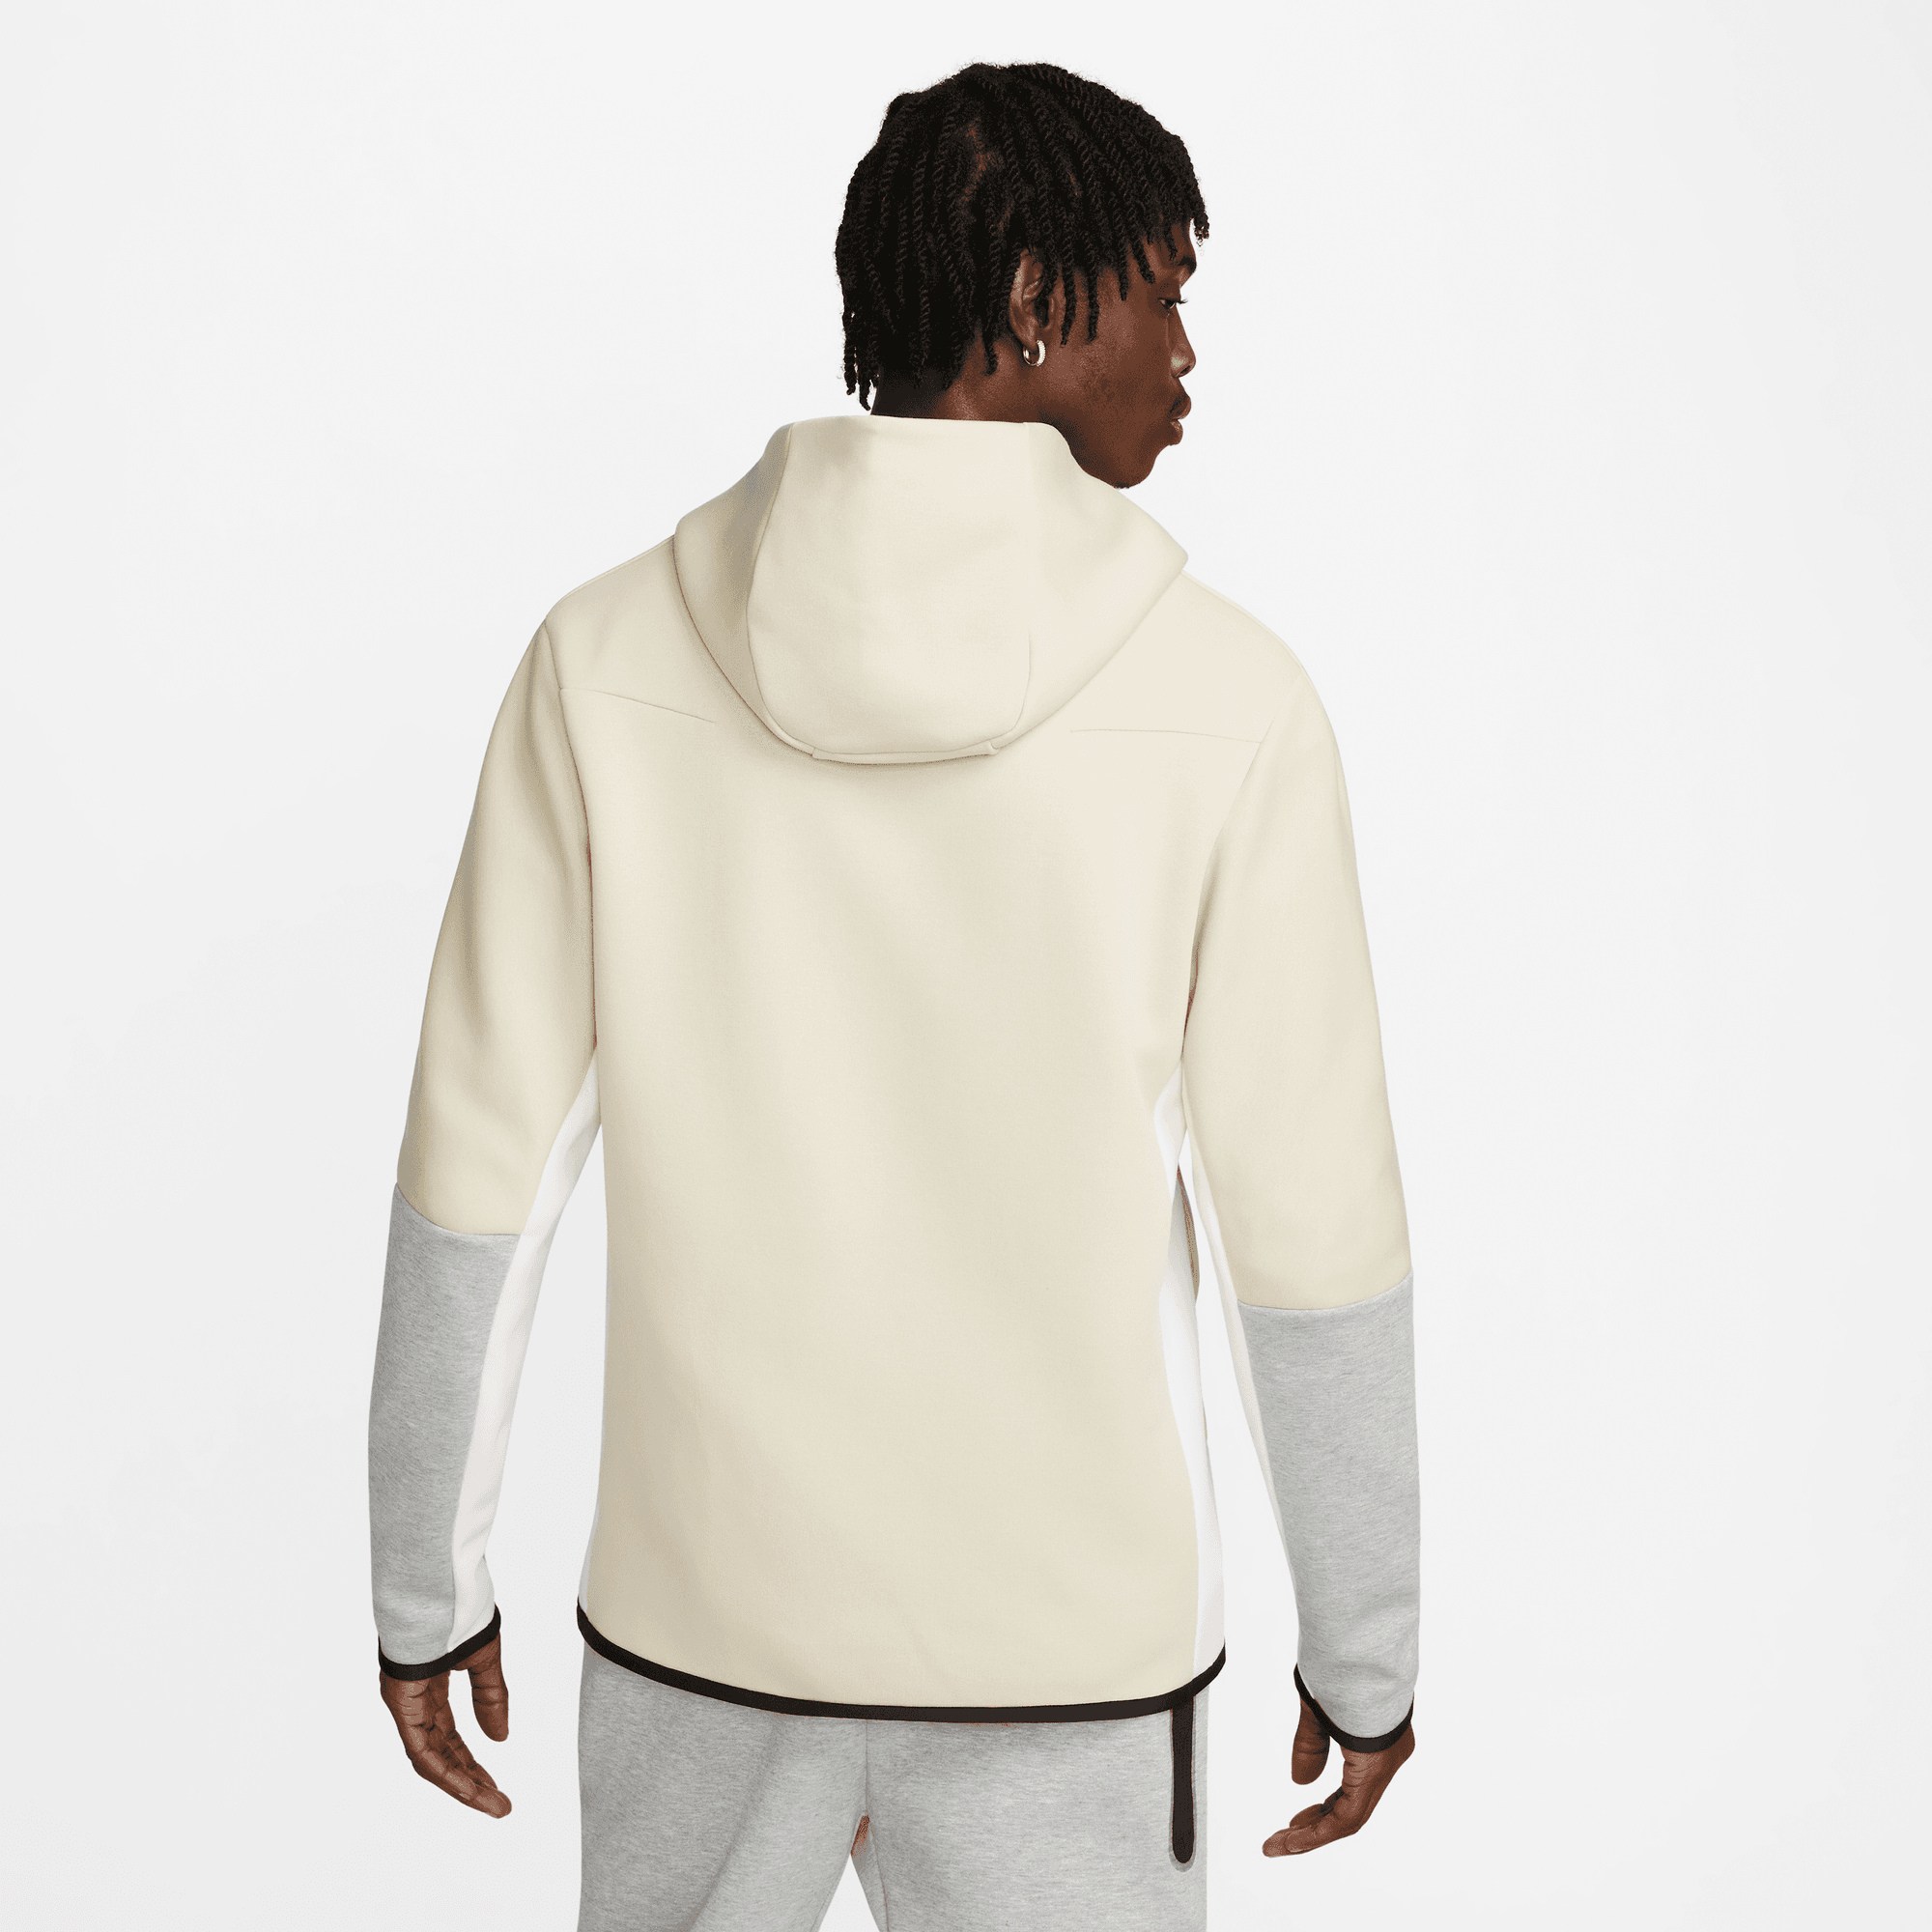 New 2023 Tech Black Tech Fleece Hoodie Full Zip Tracksuit Set For Men  Designer Jackets In Space Cotton From Xian698889, $14.79